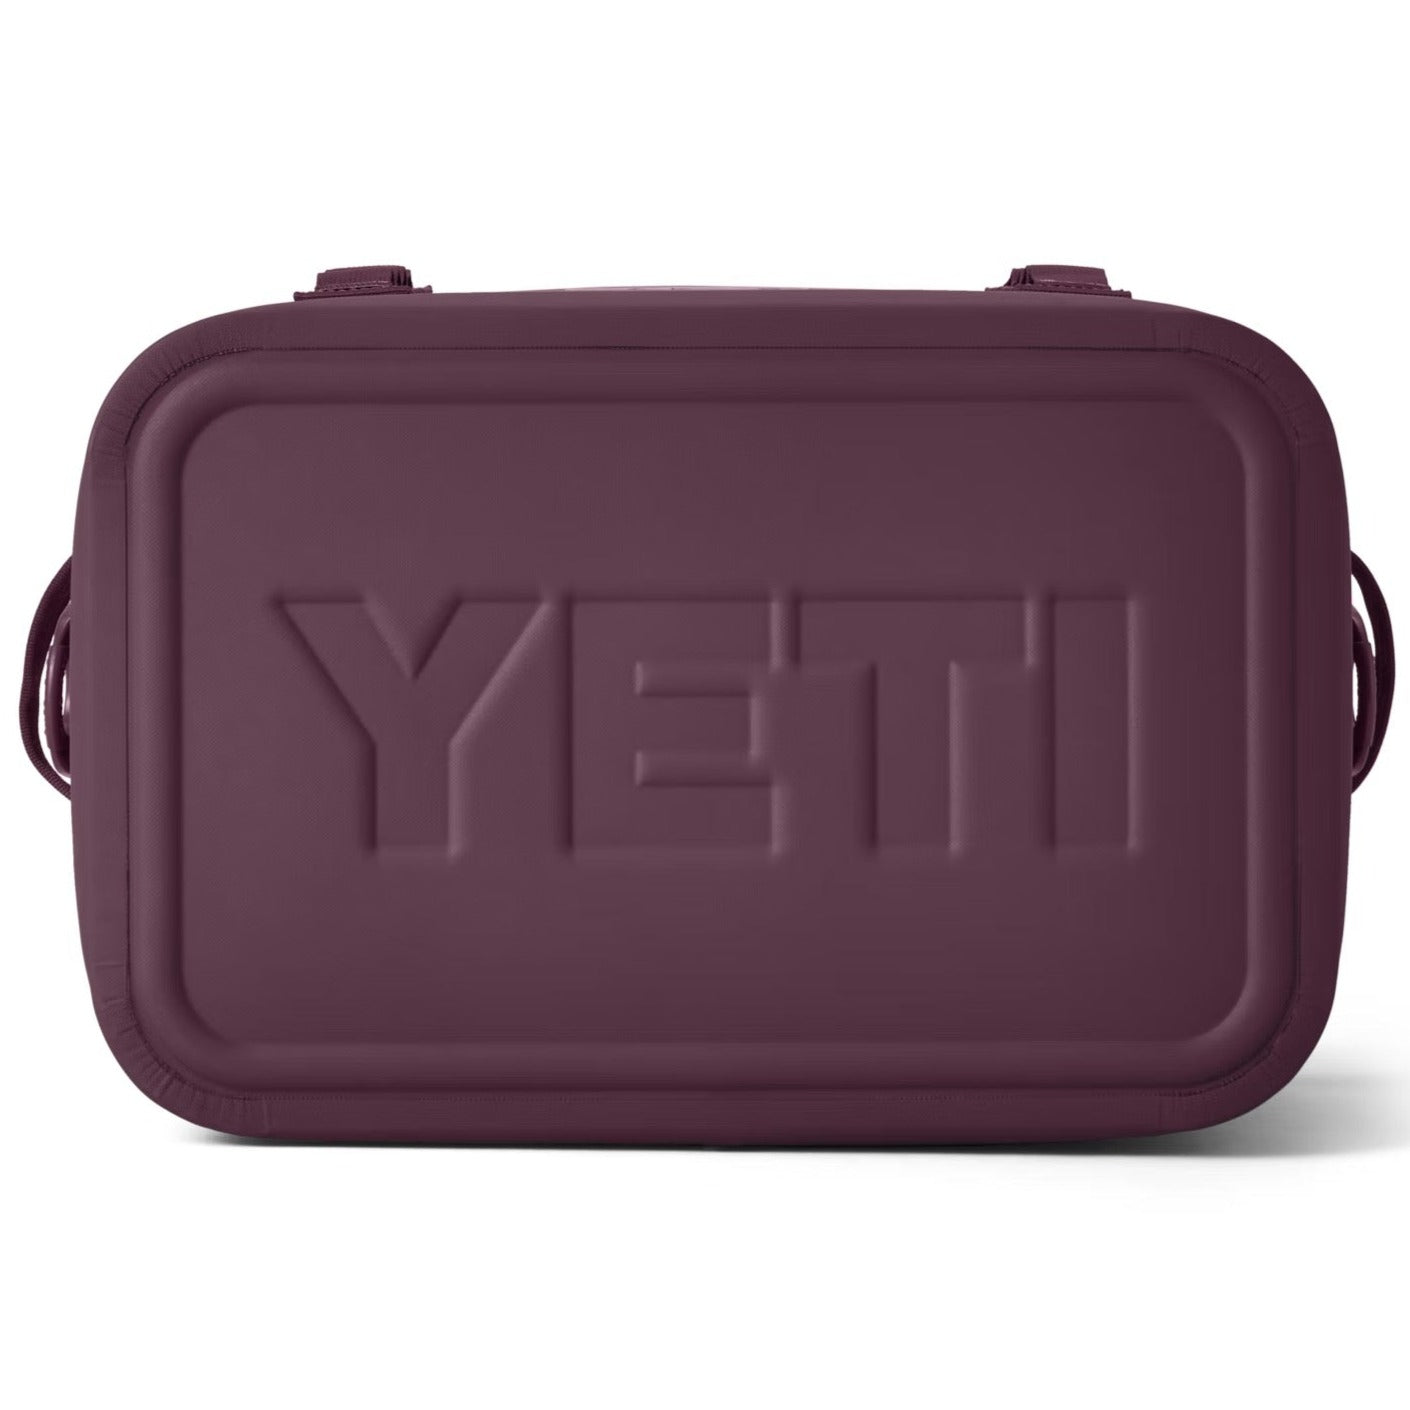 Yeti - Hopper Flip 18 Soft Cooler Nordic Purple